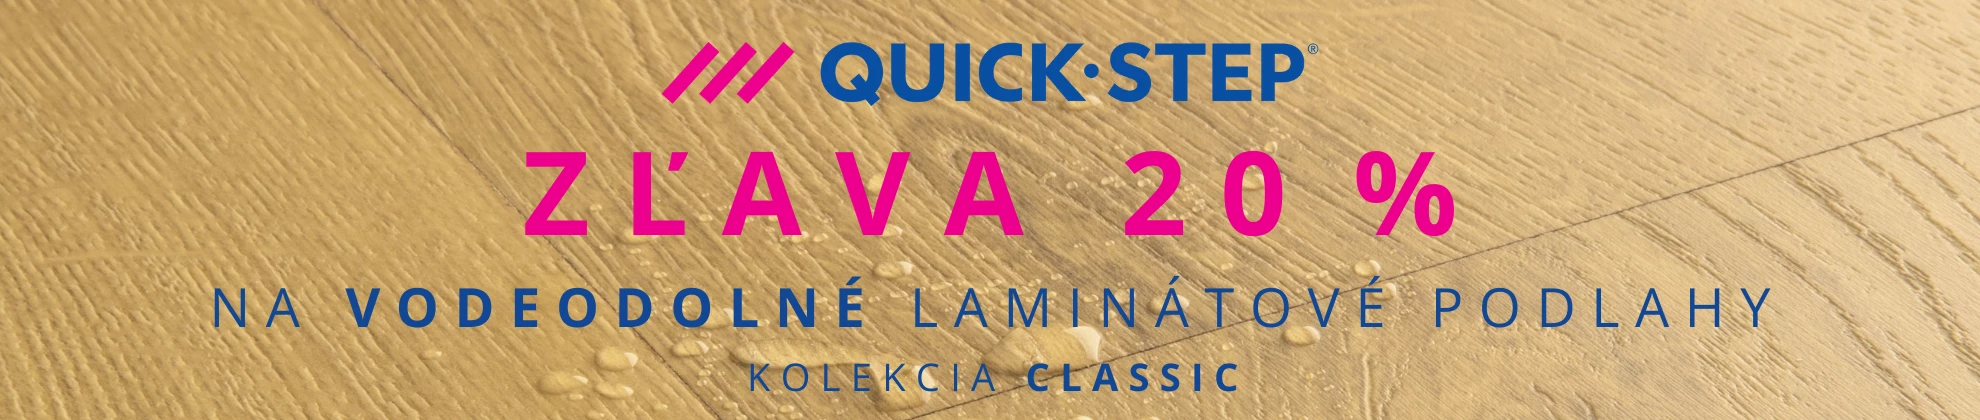 Akcia Qiuck-Step classic